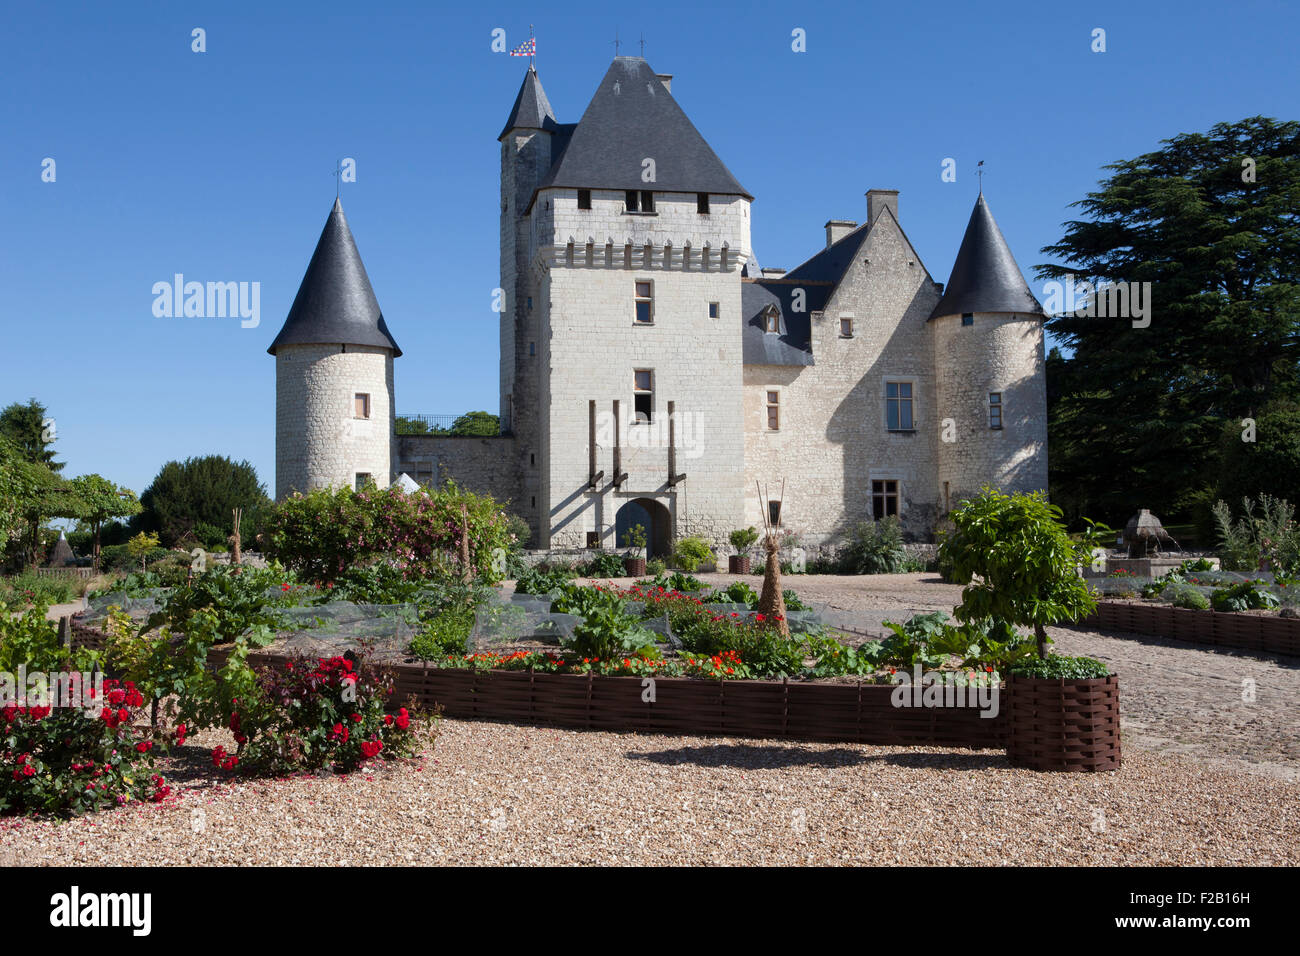 Chateau du Rivau, Potager de Gargantua, with Chateau in background Stock Photo